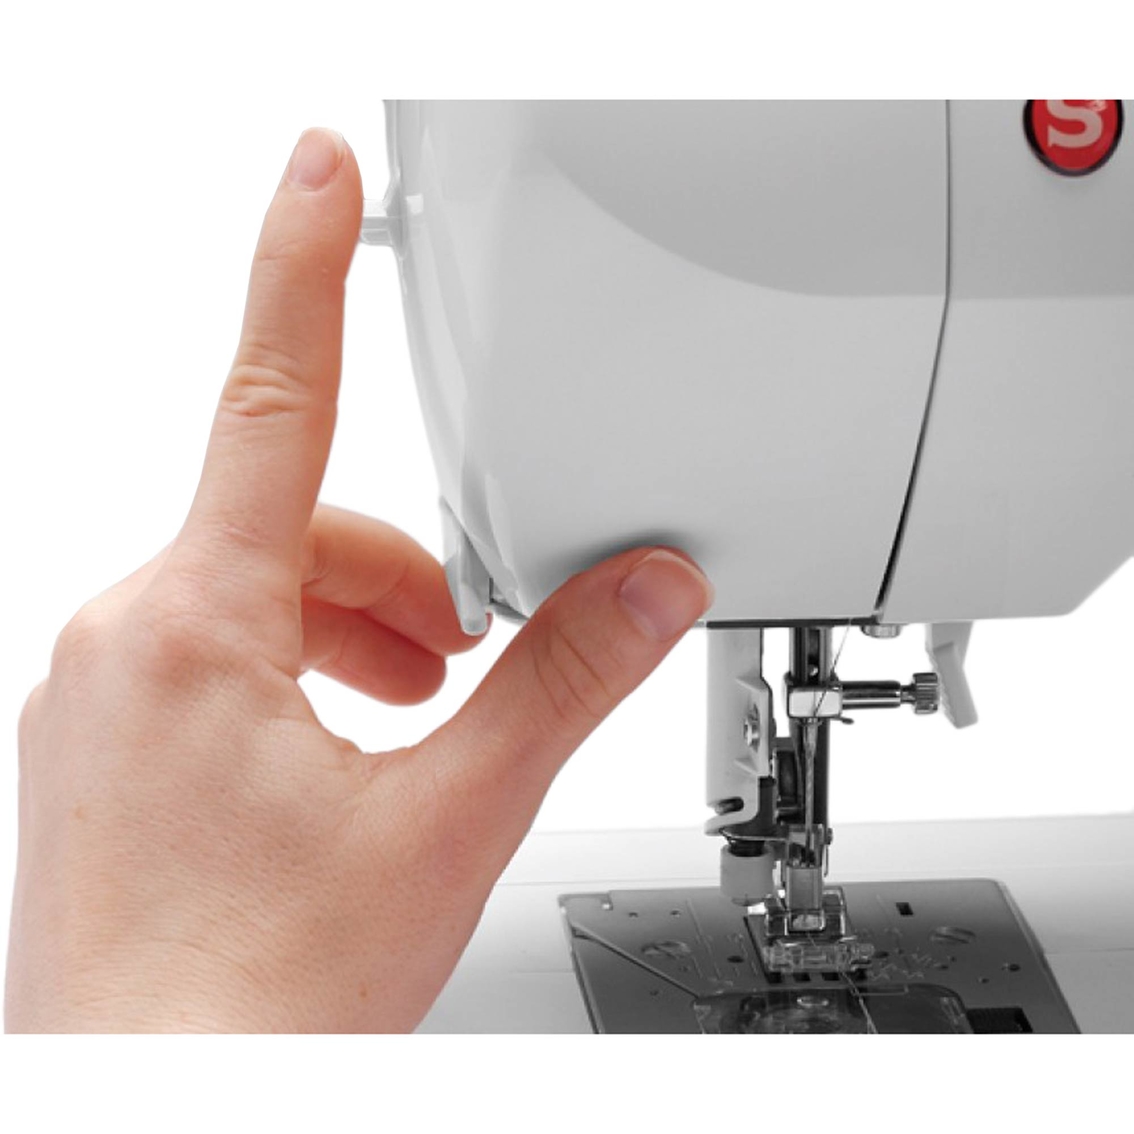 Singer Curvy 8763 Sewing Machine - Image 2 of 6